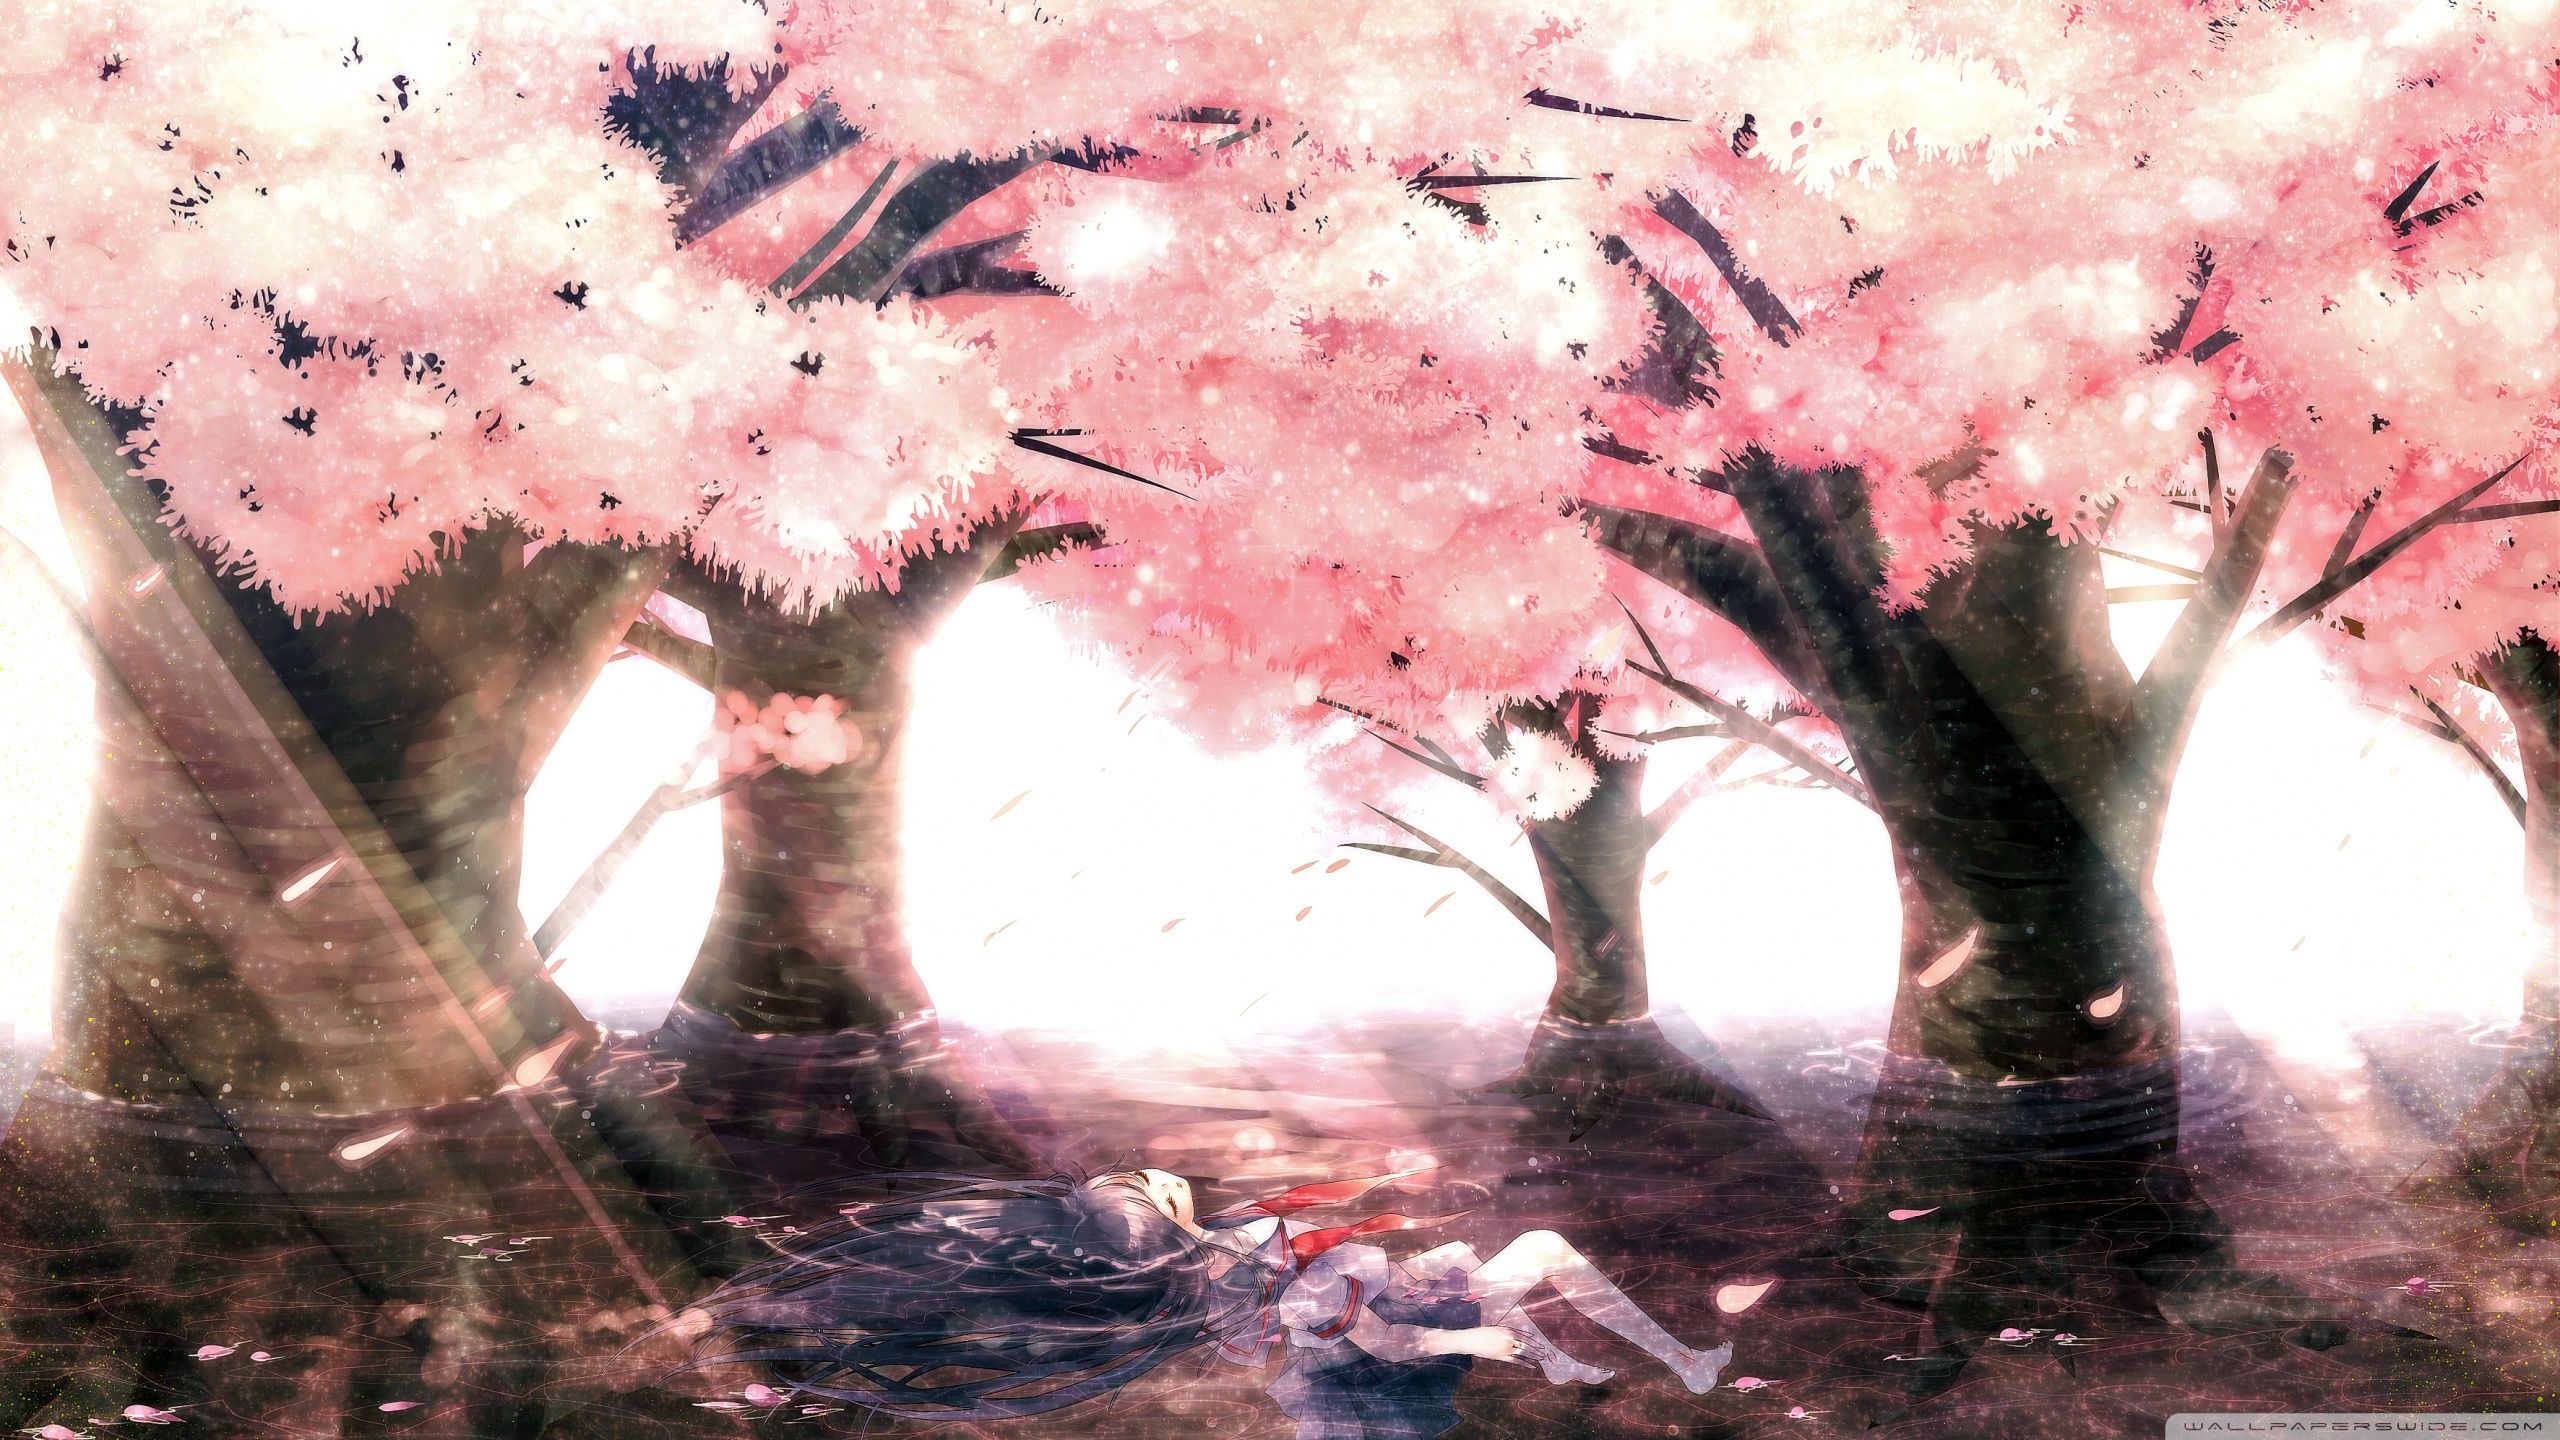 Anime Girl Under Cherry Blossom Tree